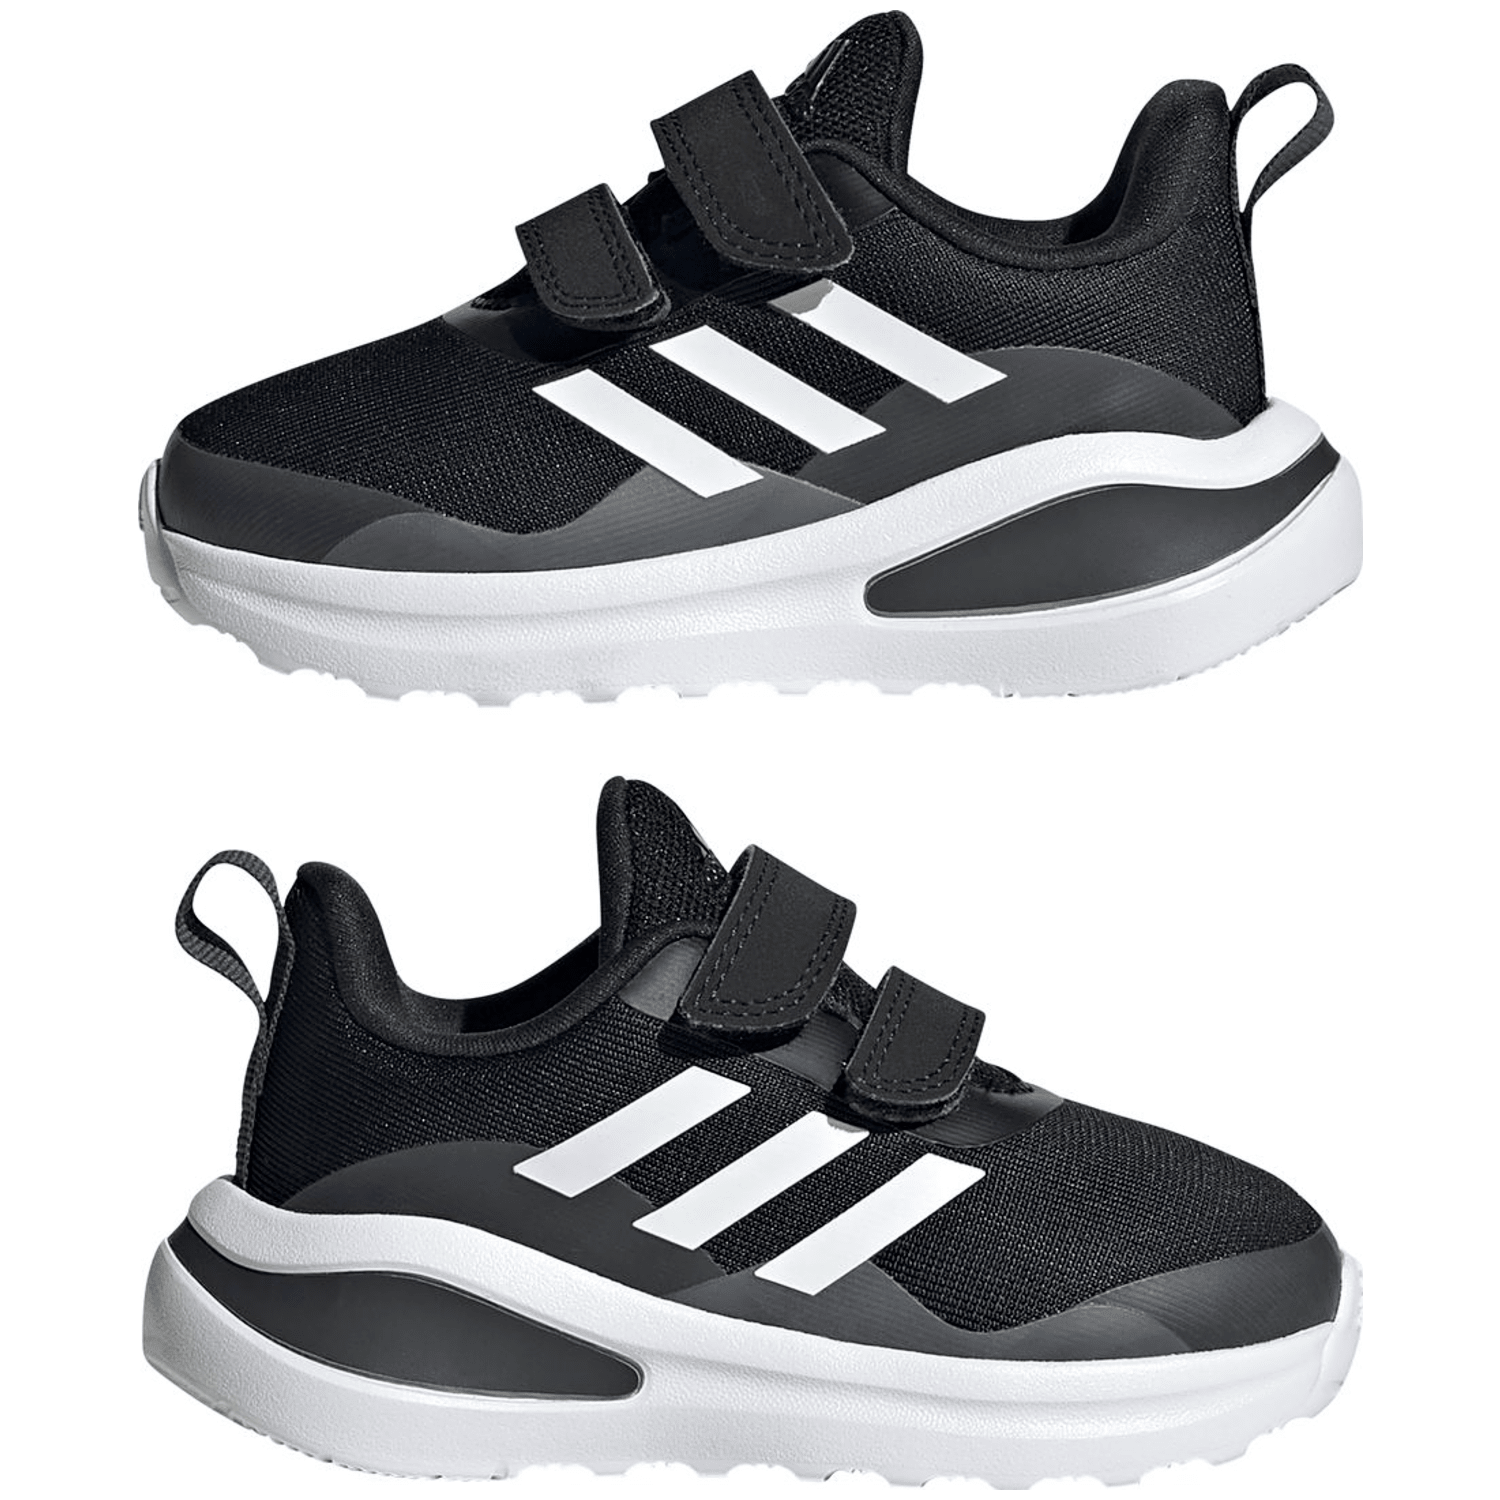 Adidas FortaRun Double Strap Schuh Kinder